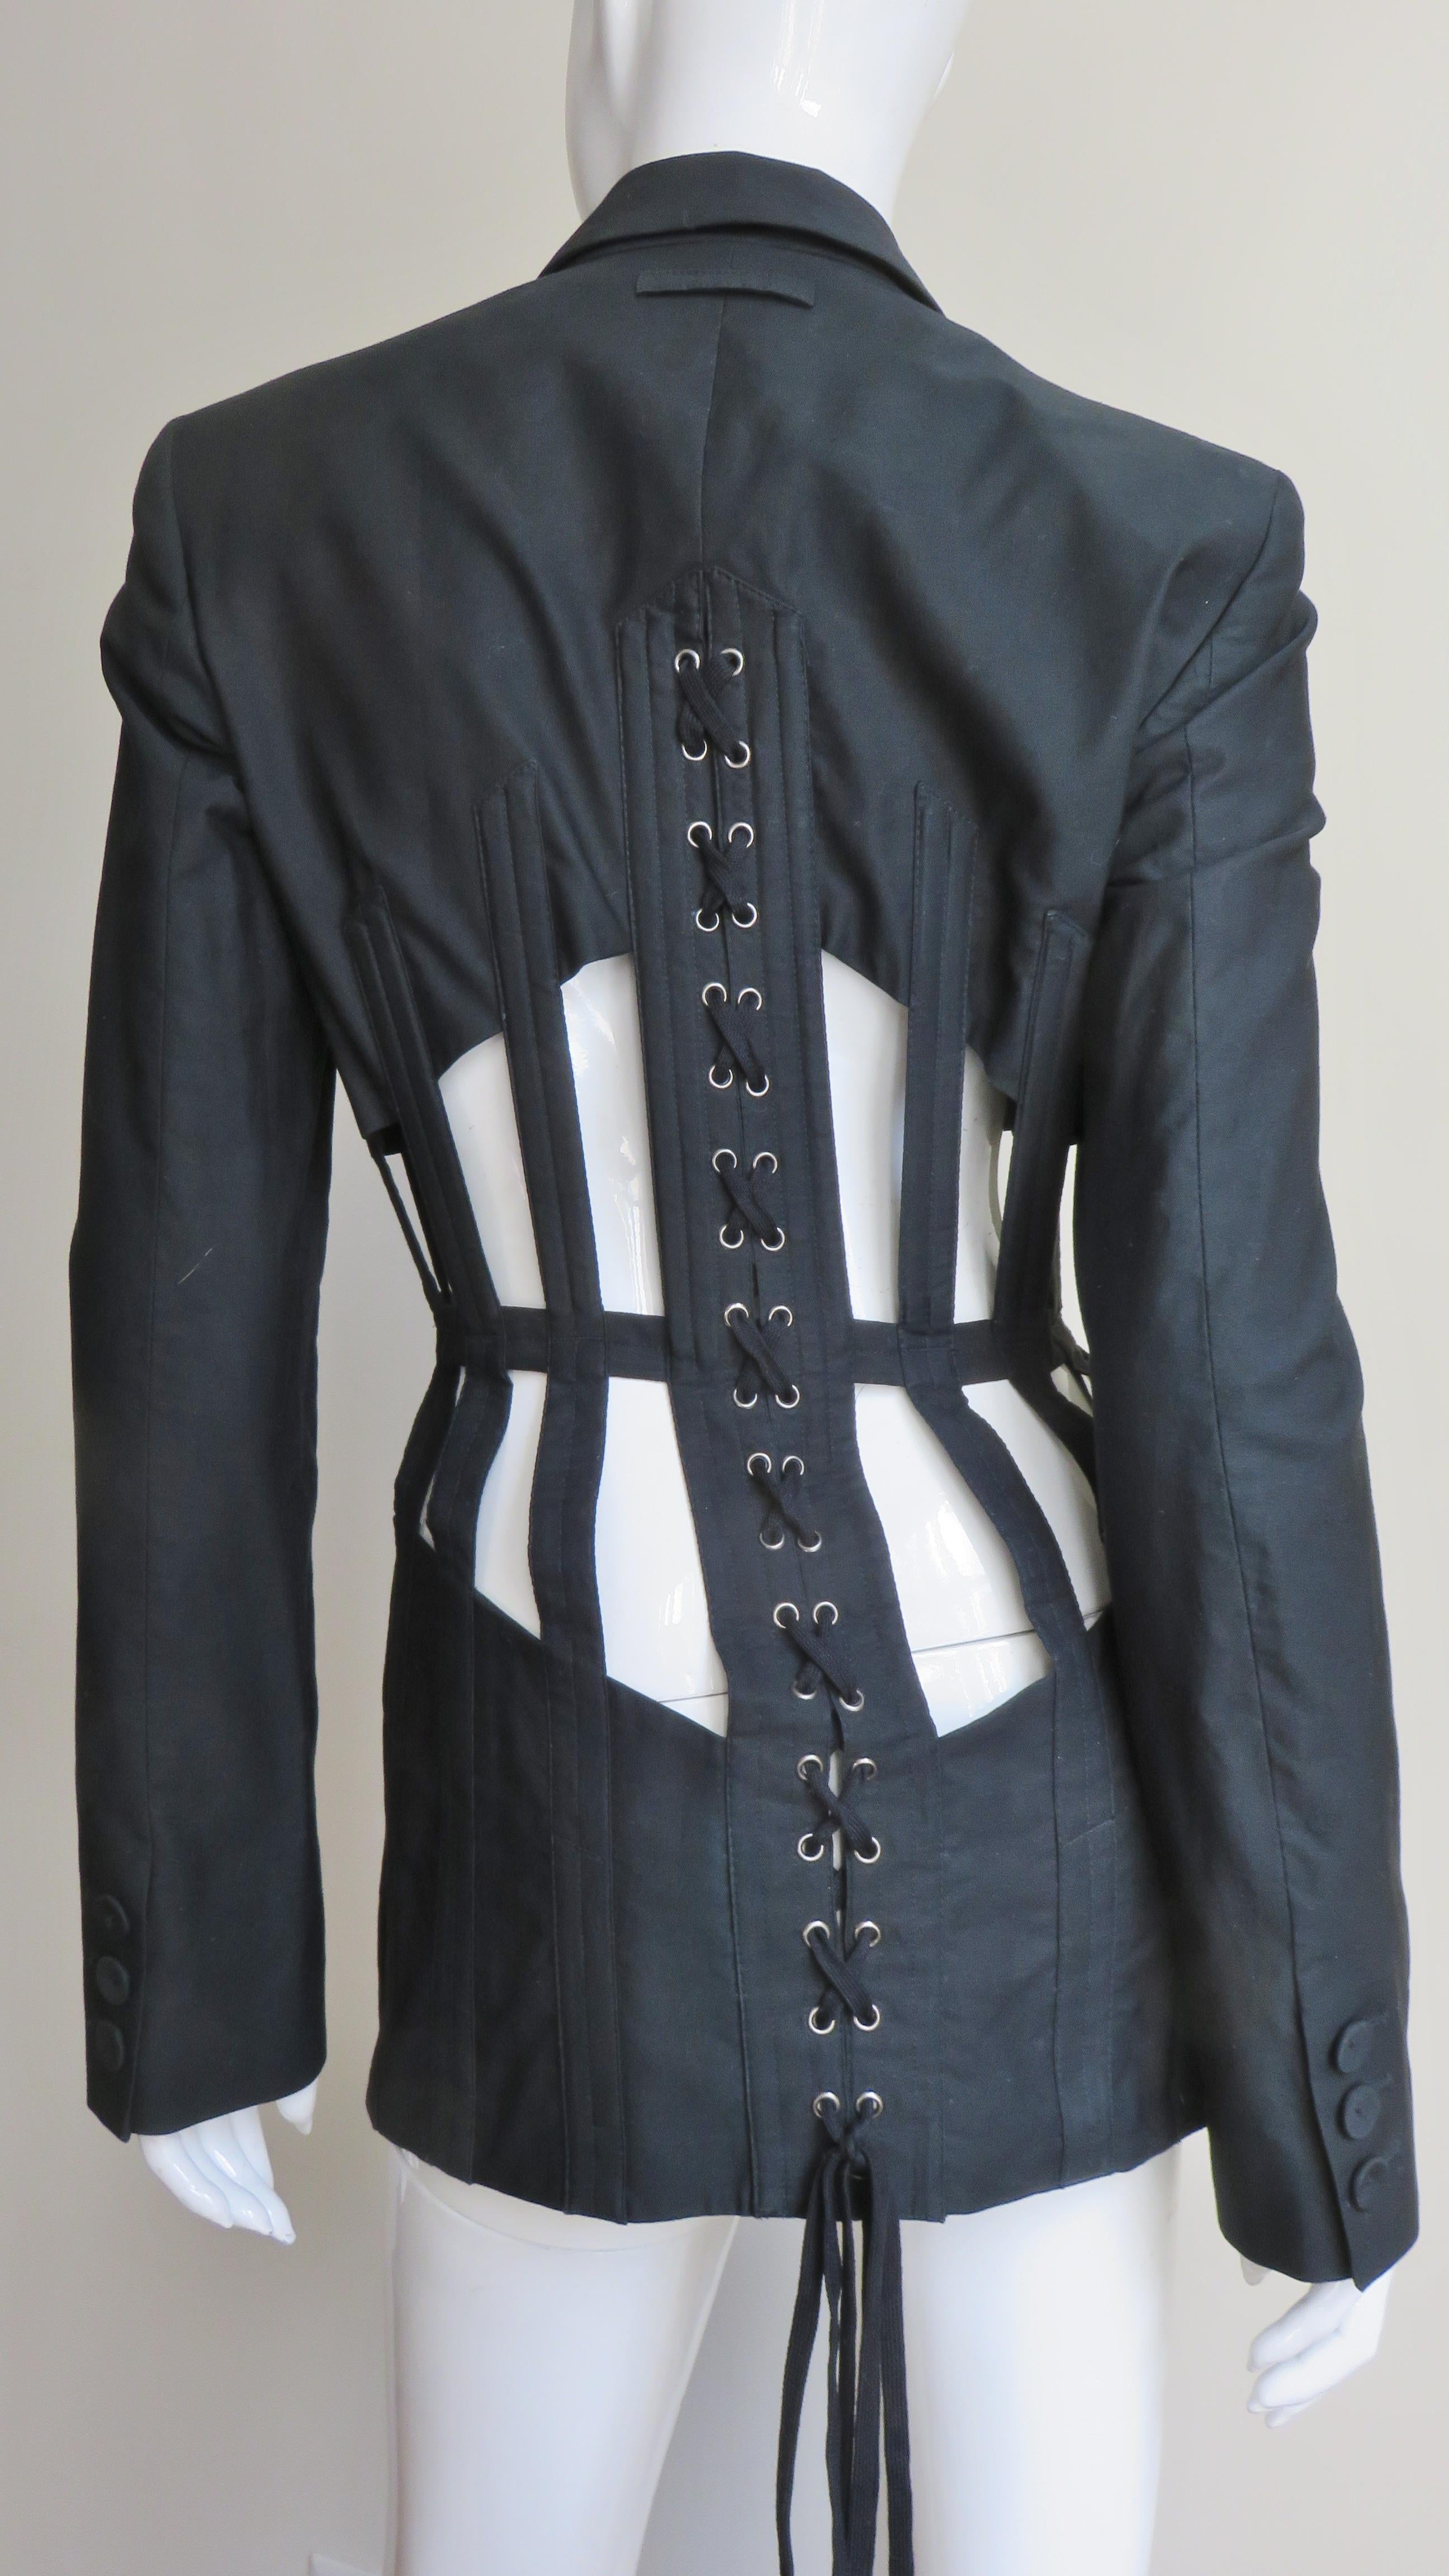 Jean Paul Gaultier Iconic Cage Corset lace up Jacket Pant Suit S/S 1989 For Sale 10